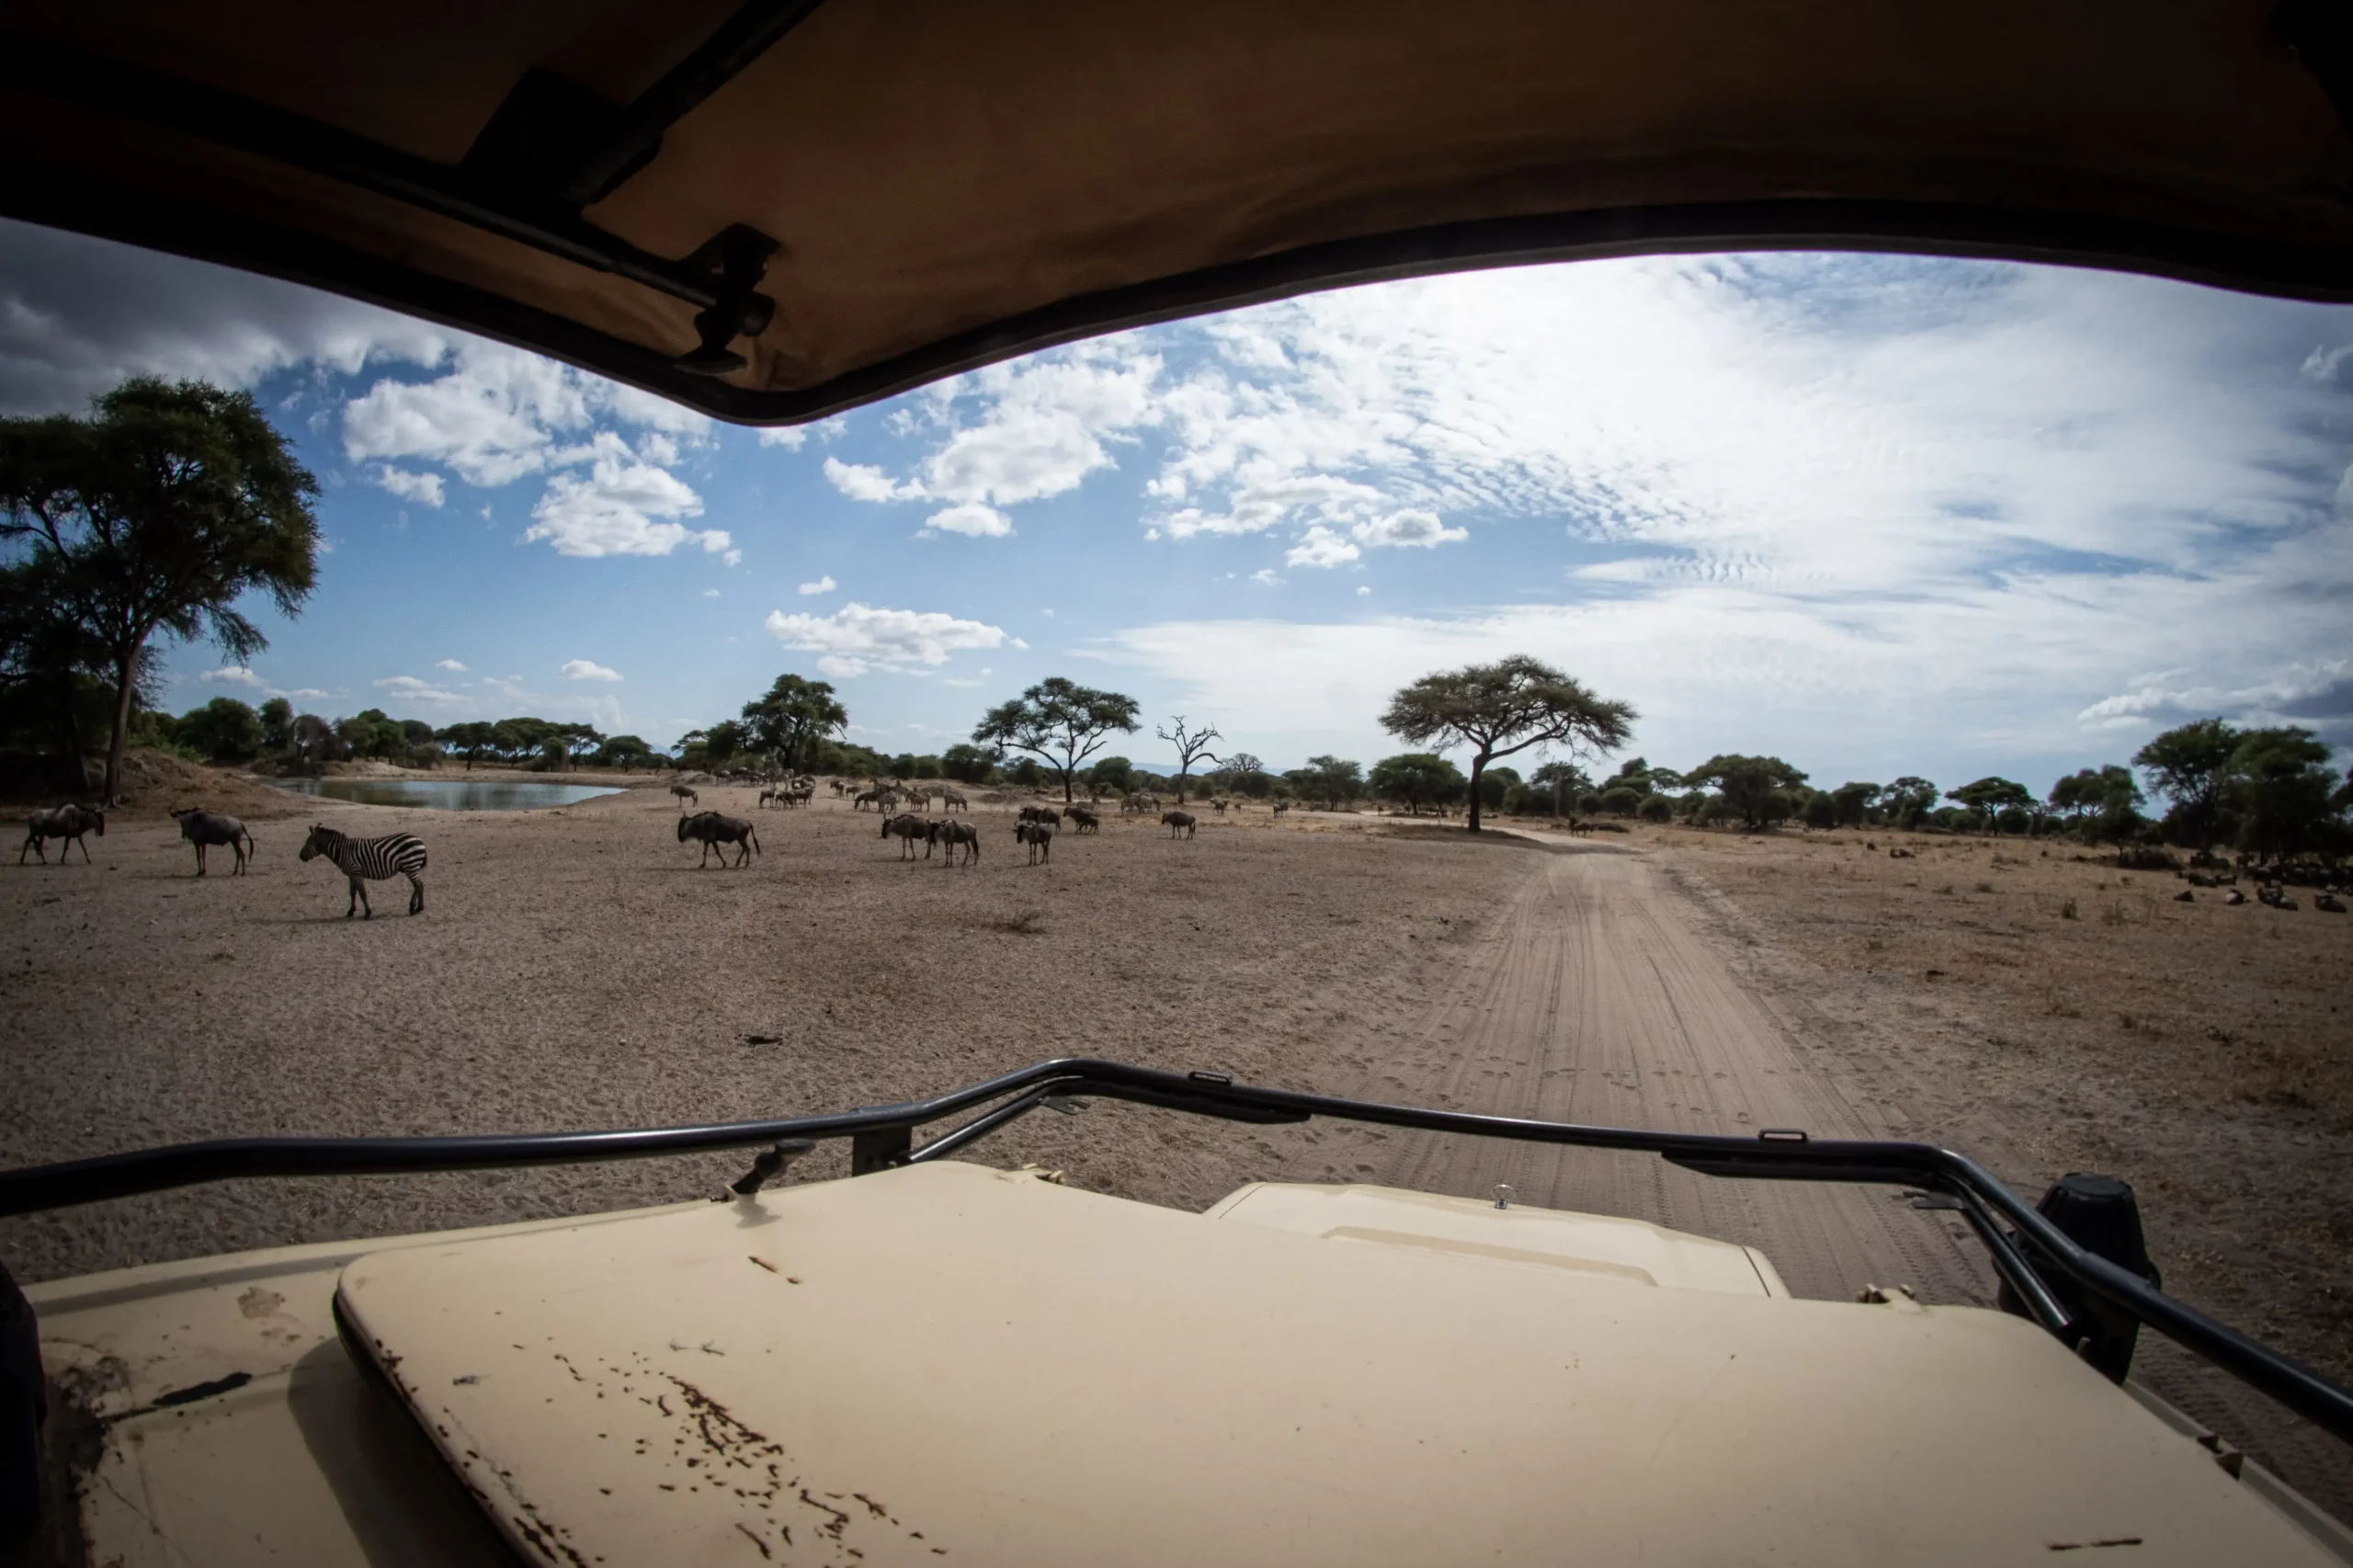 View of zebras surrounded around safari vehicle